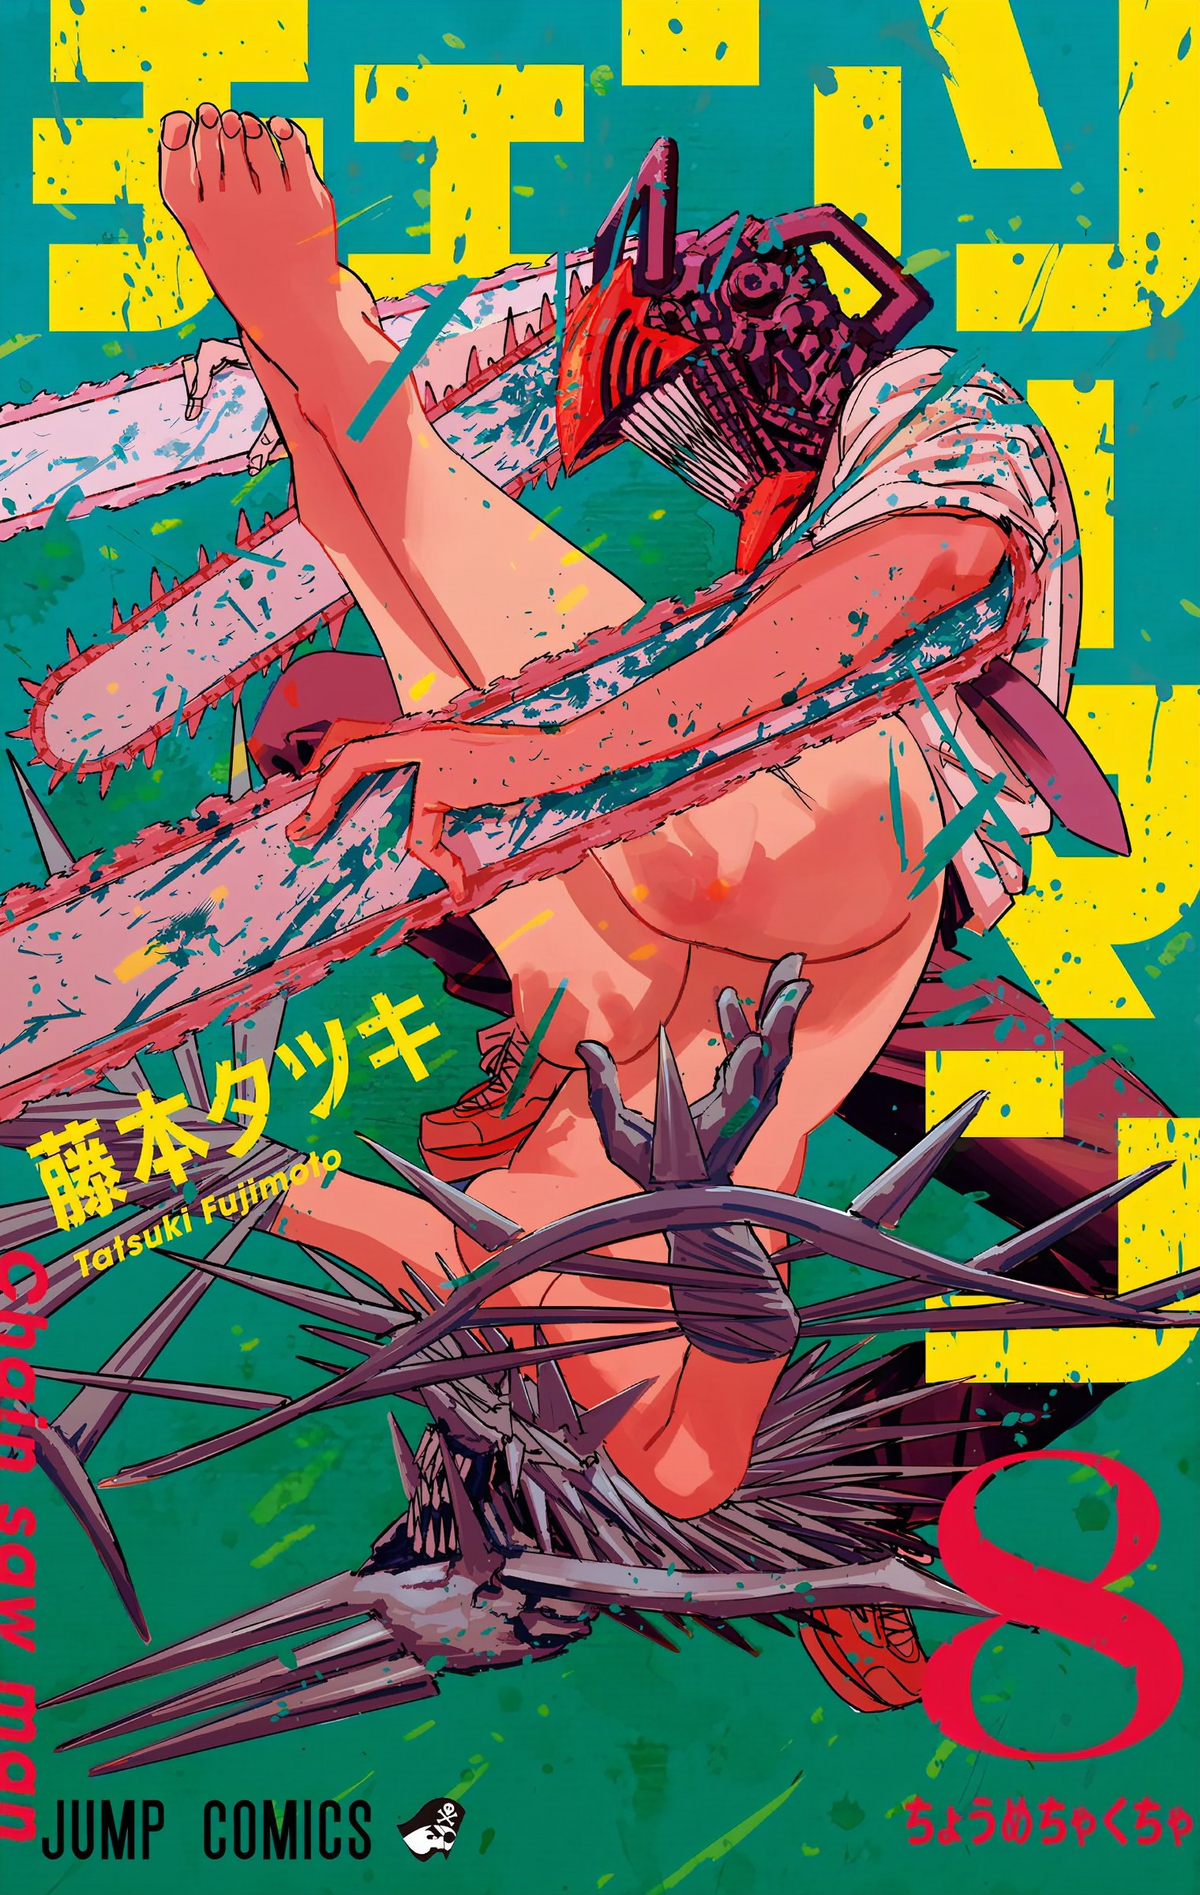 Chainsaw man 1 by Fujimoto, Tatsuki